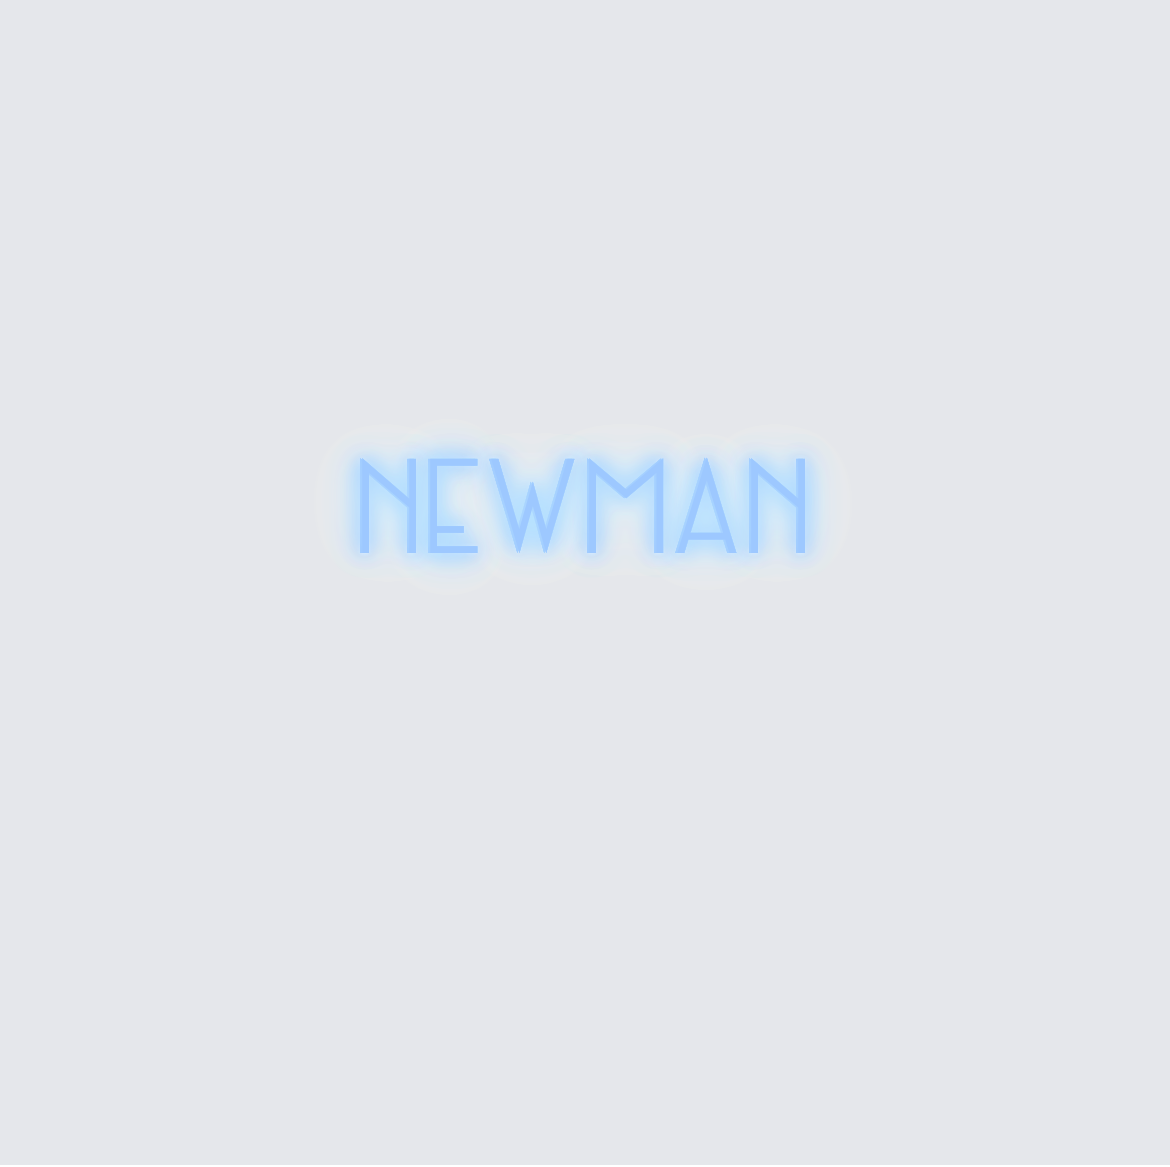 Custom neon sign - Newman